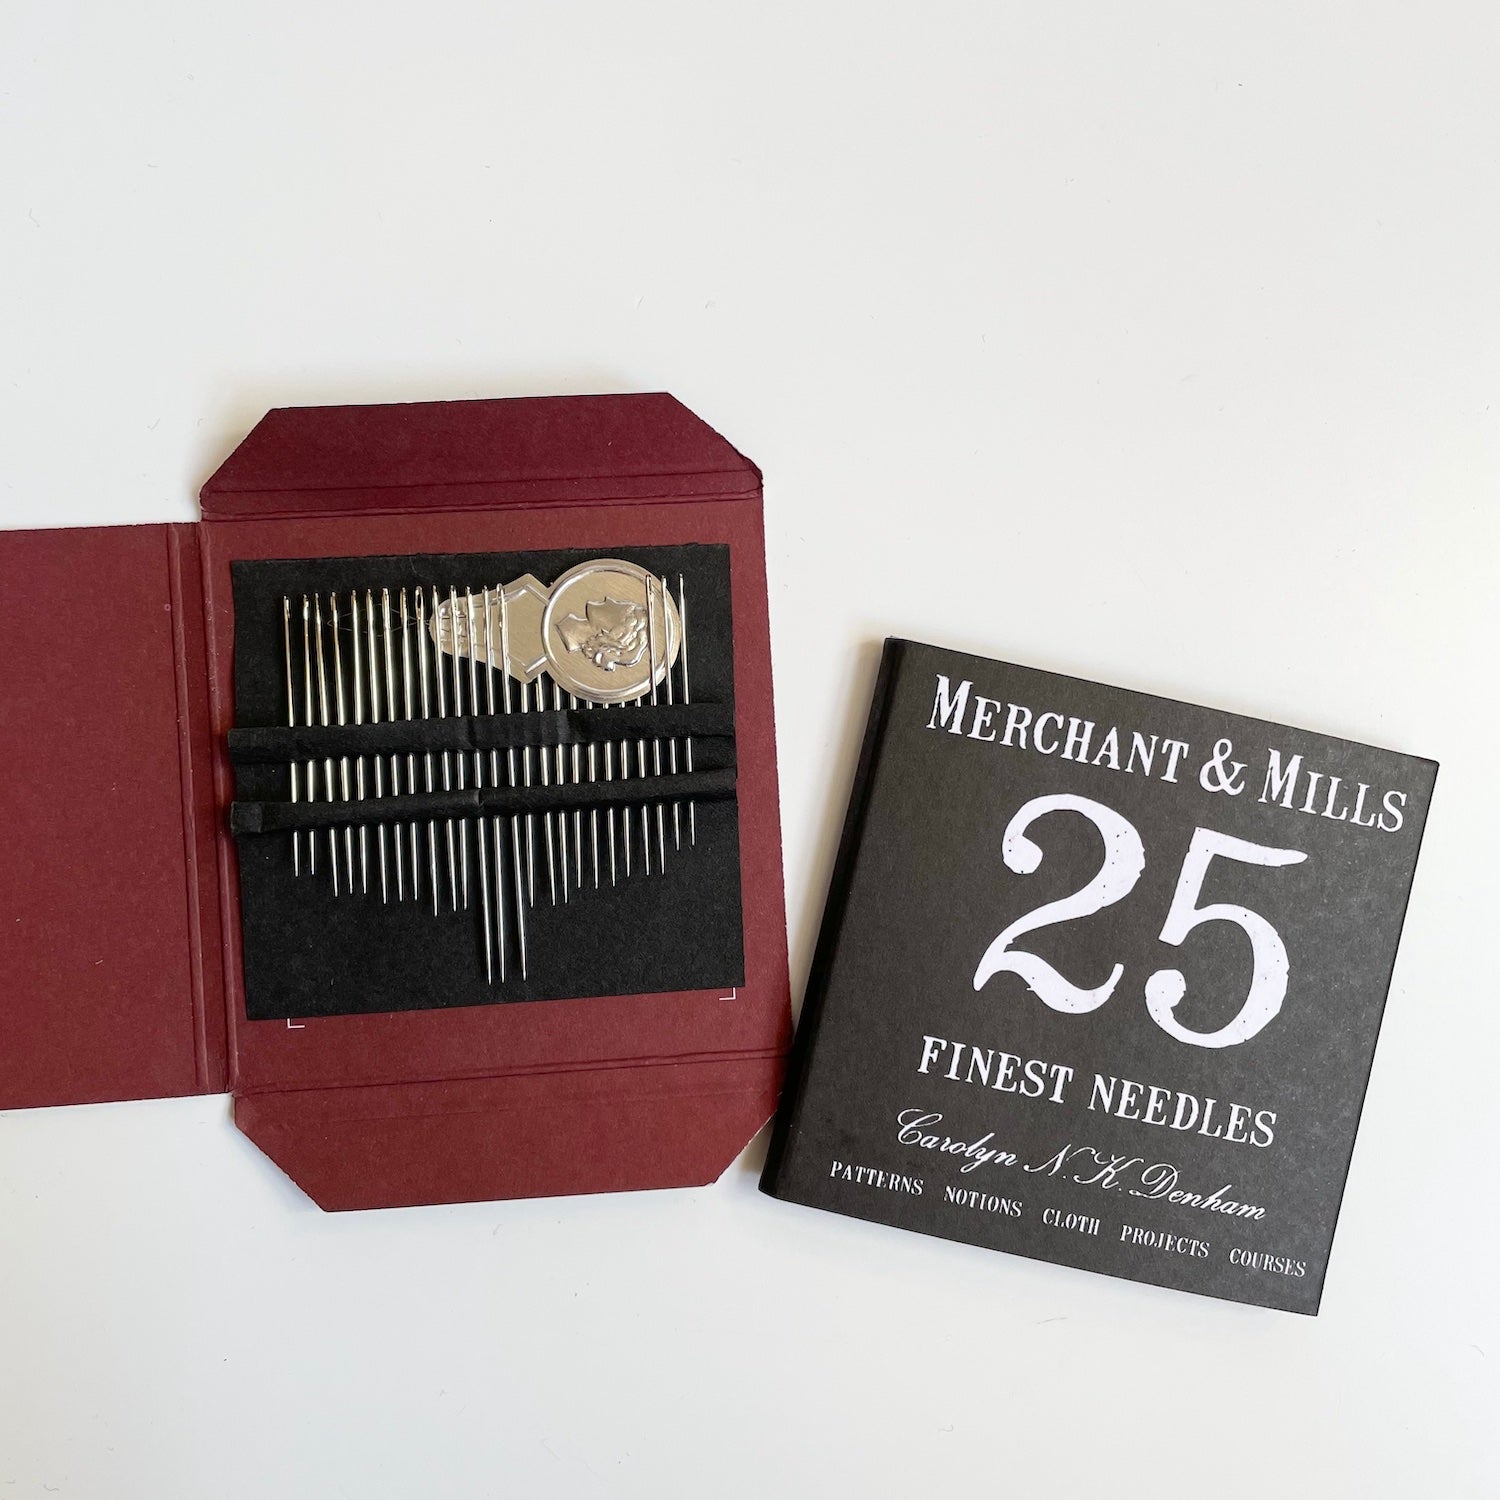 Merchant & Mills Notions : Finest Sewing Needles